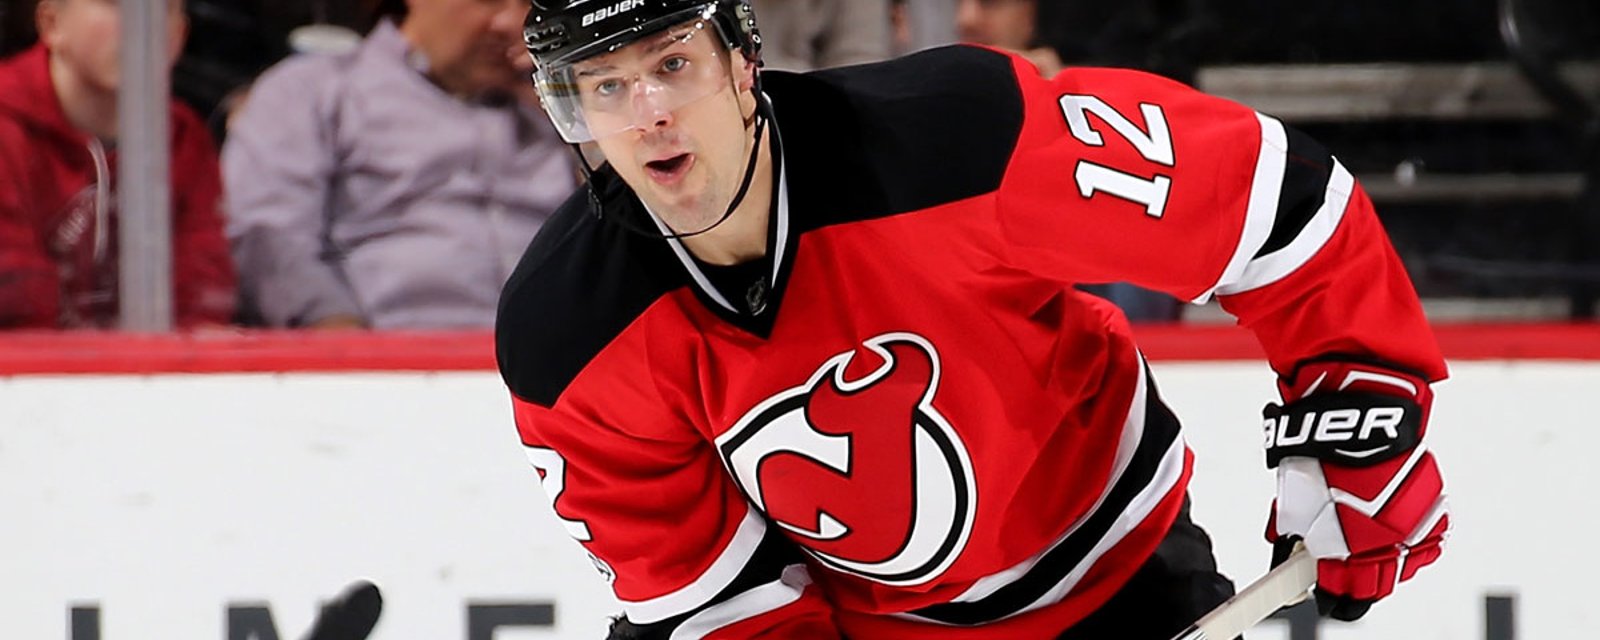 Devils' Lovejoy becomes 1st active NHLer to take this HUGE decision 